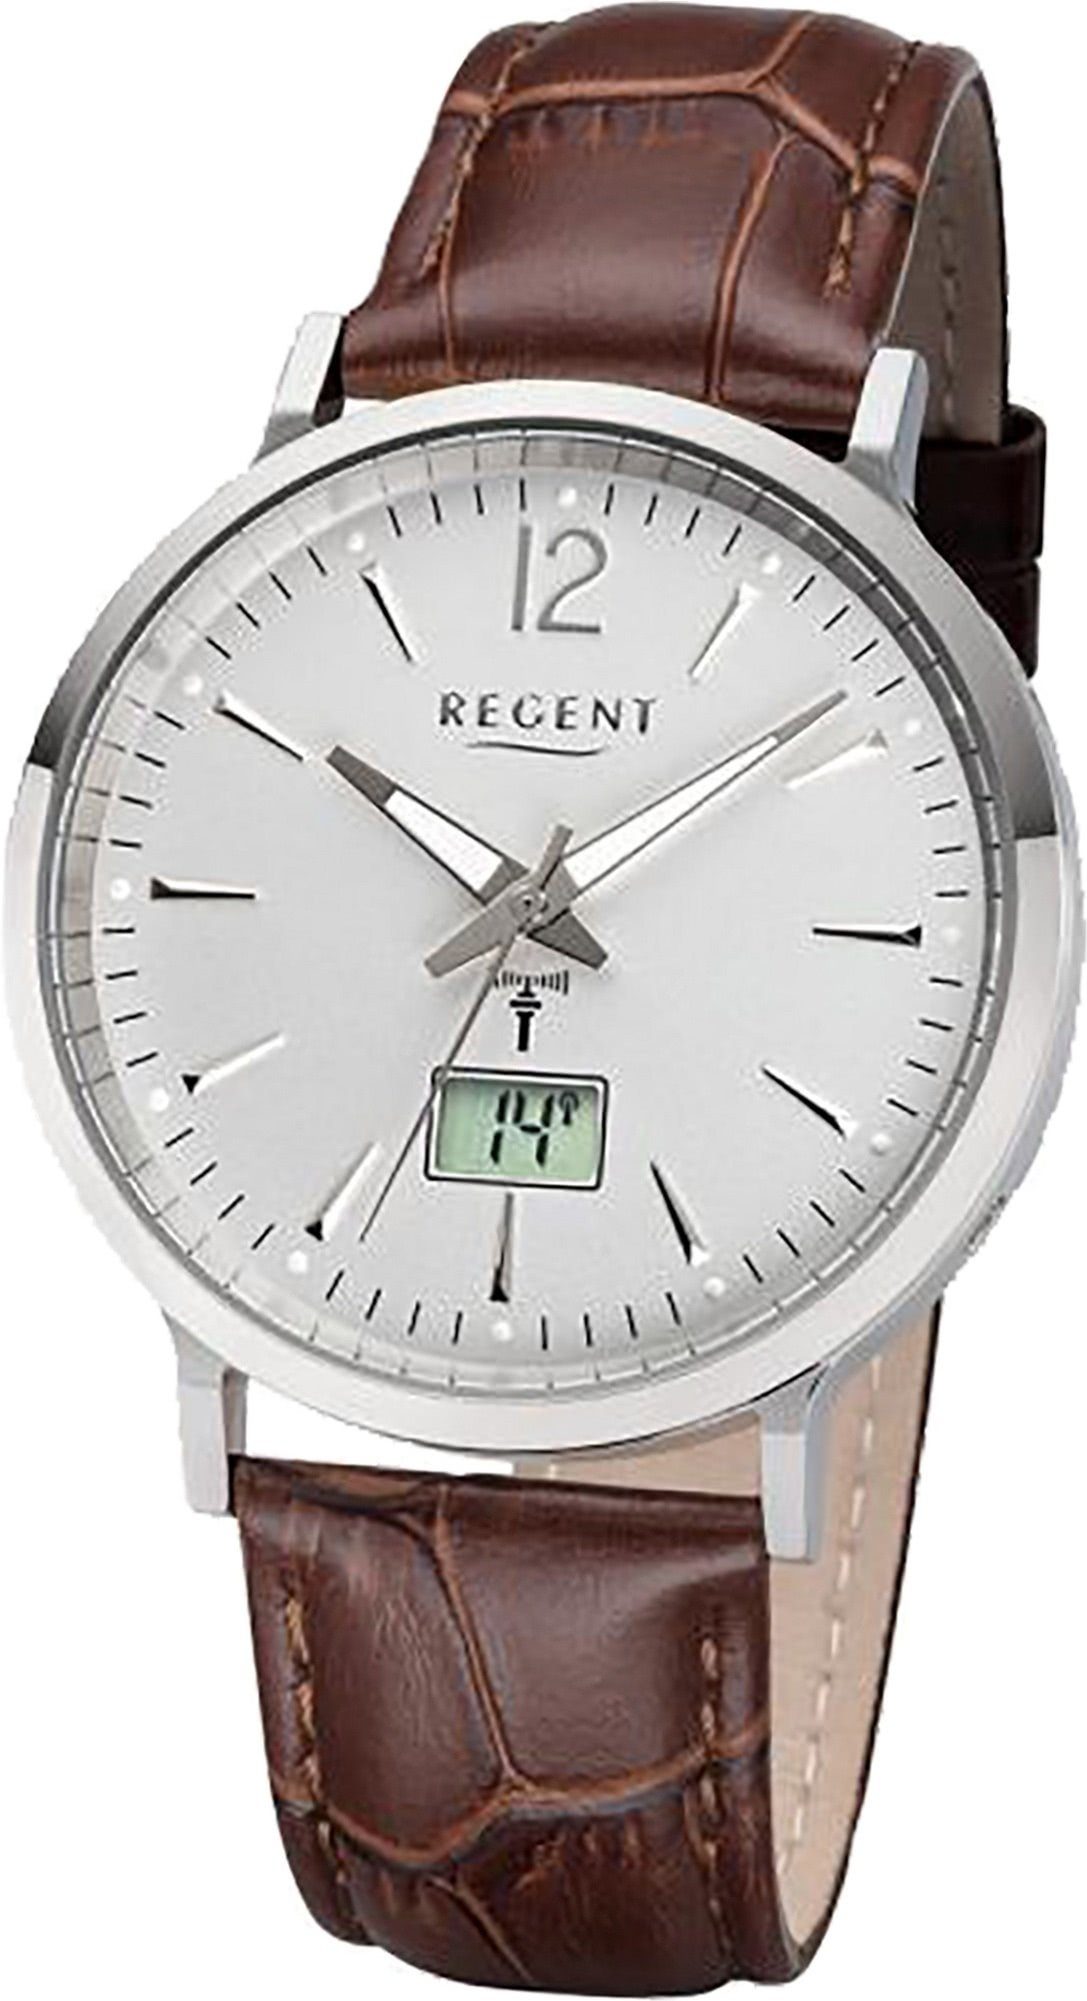 Regent Funkuhr Regent Leder Herren Uhr FR-243, Herrenuhr mit Lederarmband, rundes Gehäuse (ca. 40mm), Elegant-Style